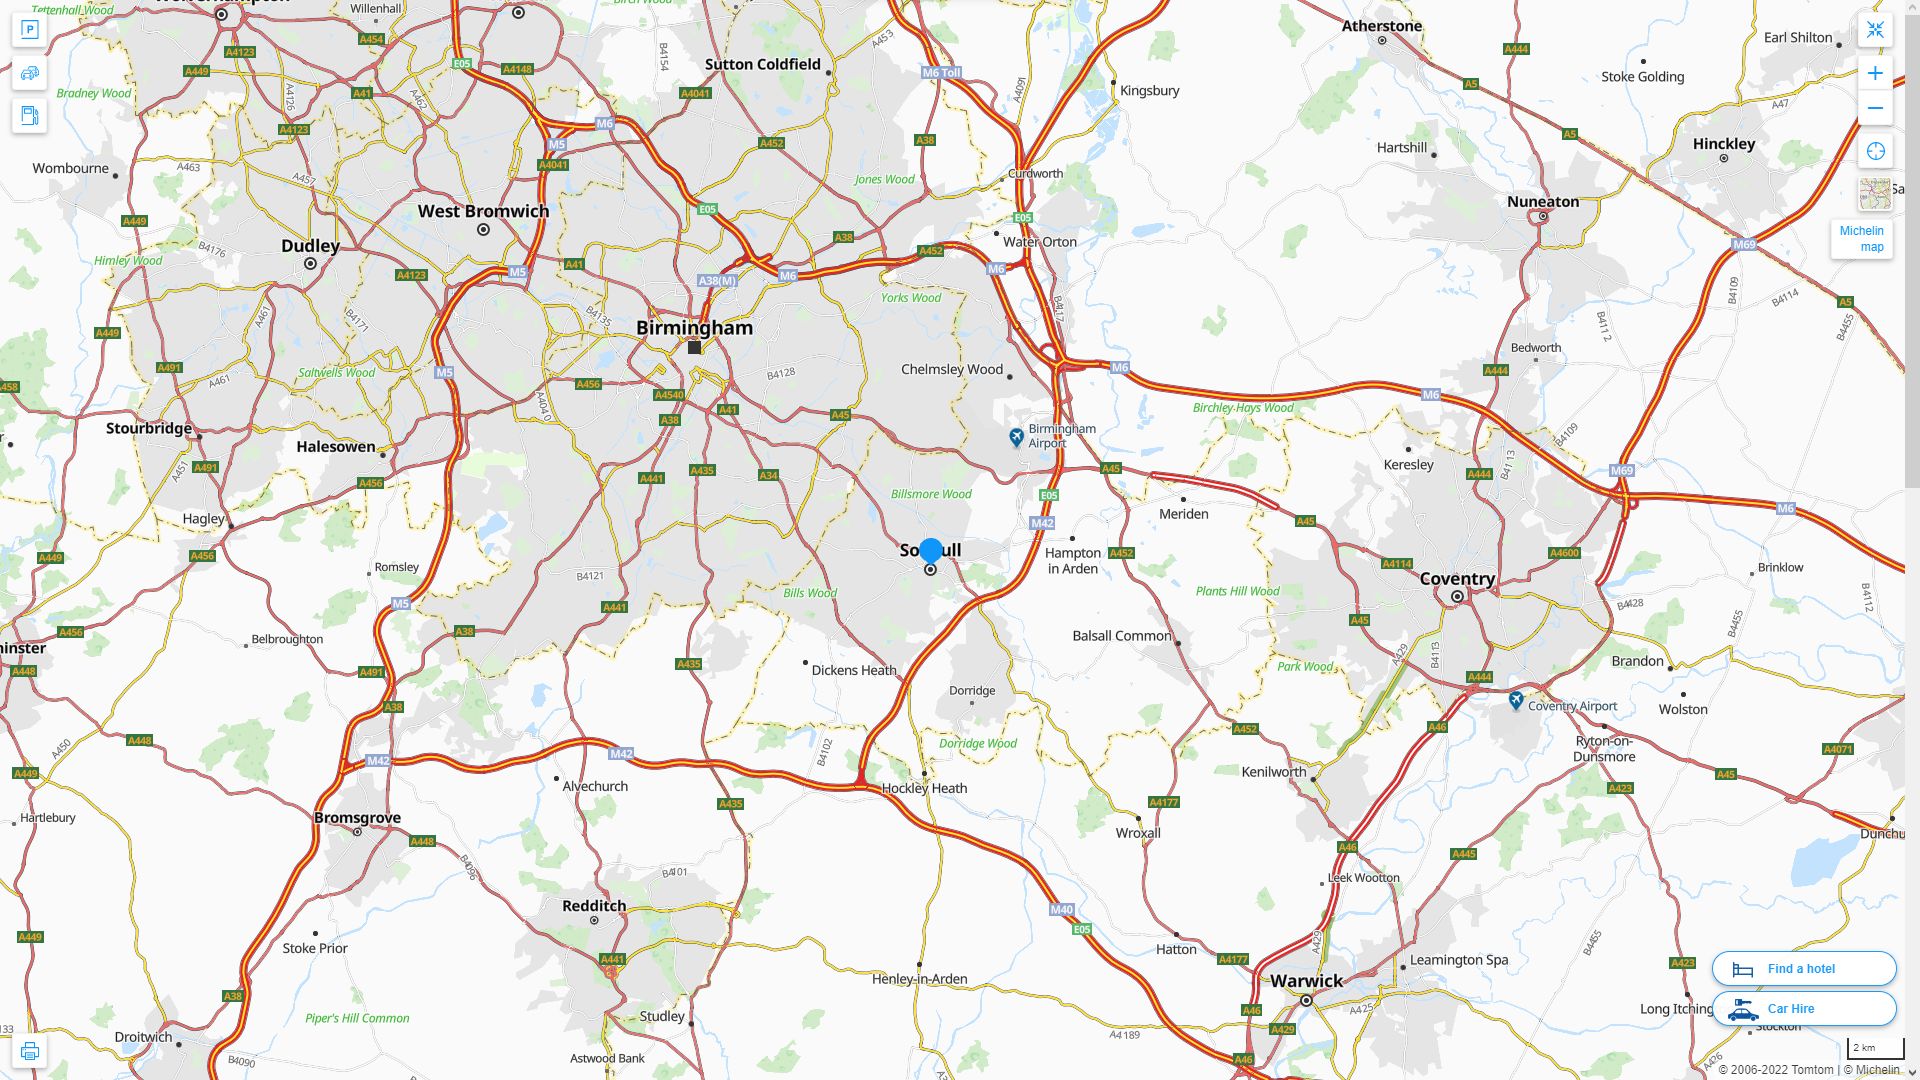 Solihull Royaume Uni Autoroute et carte routiere